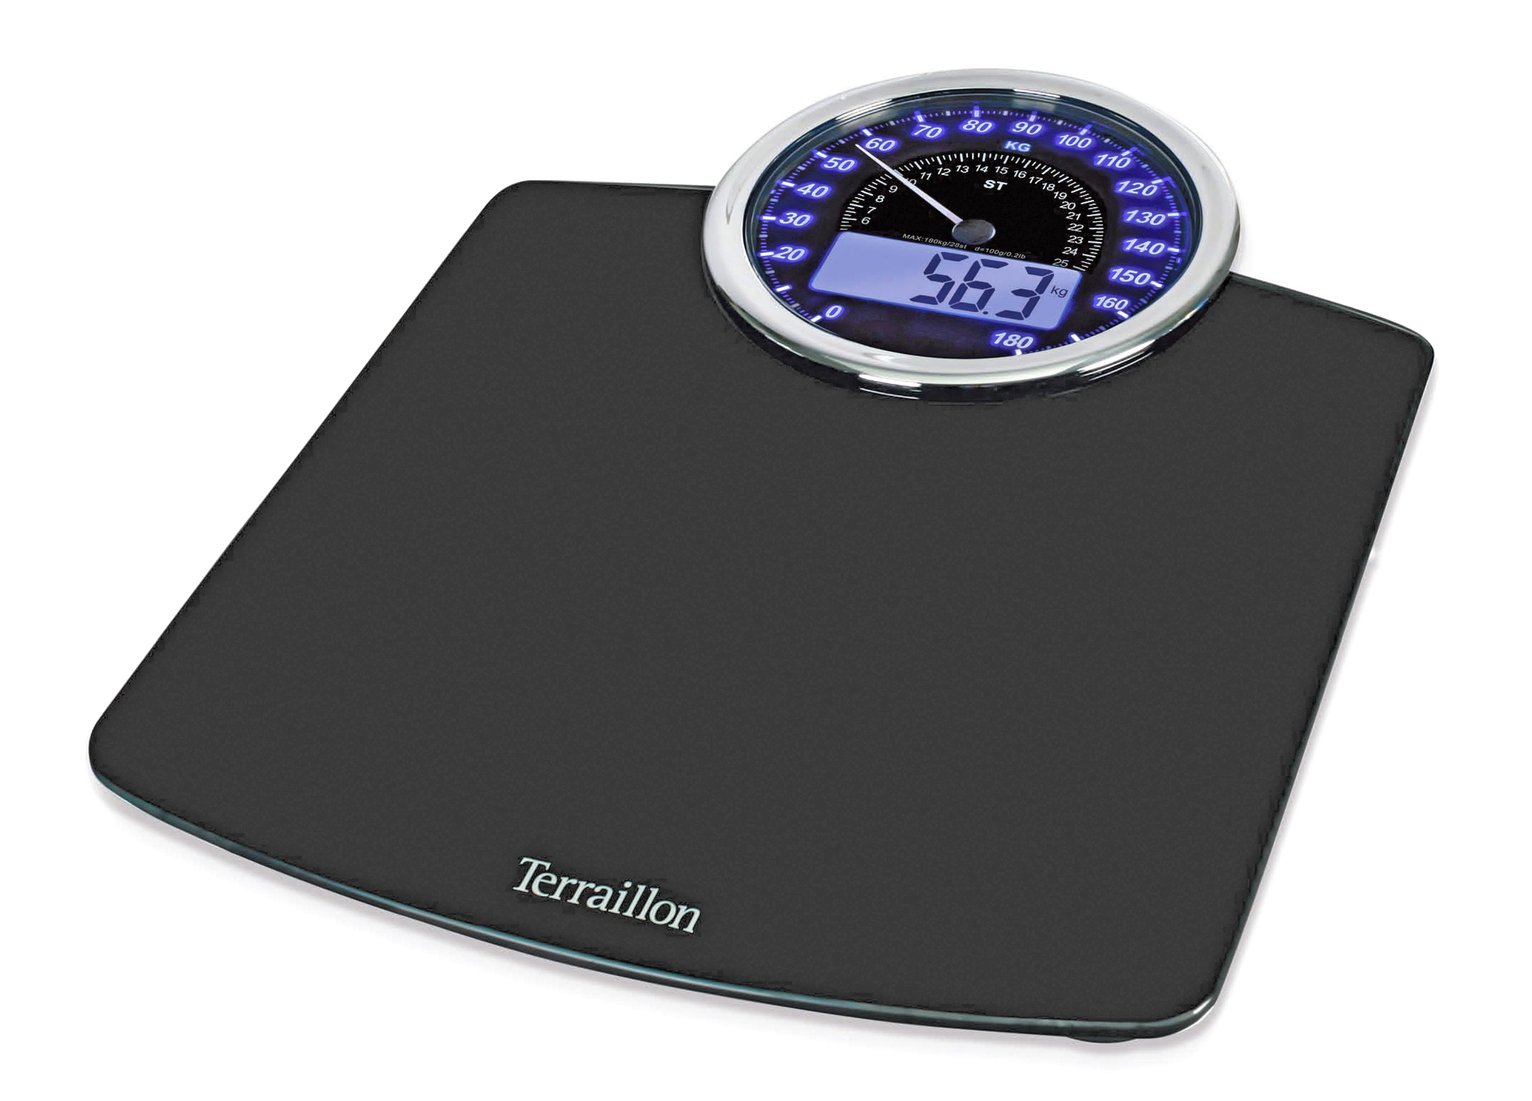 Terraillon GP3000 Dual Display Mechanical Bathroom Scales Review